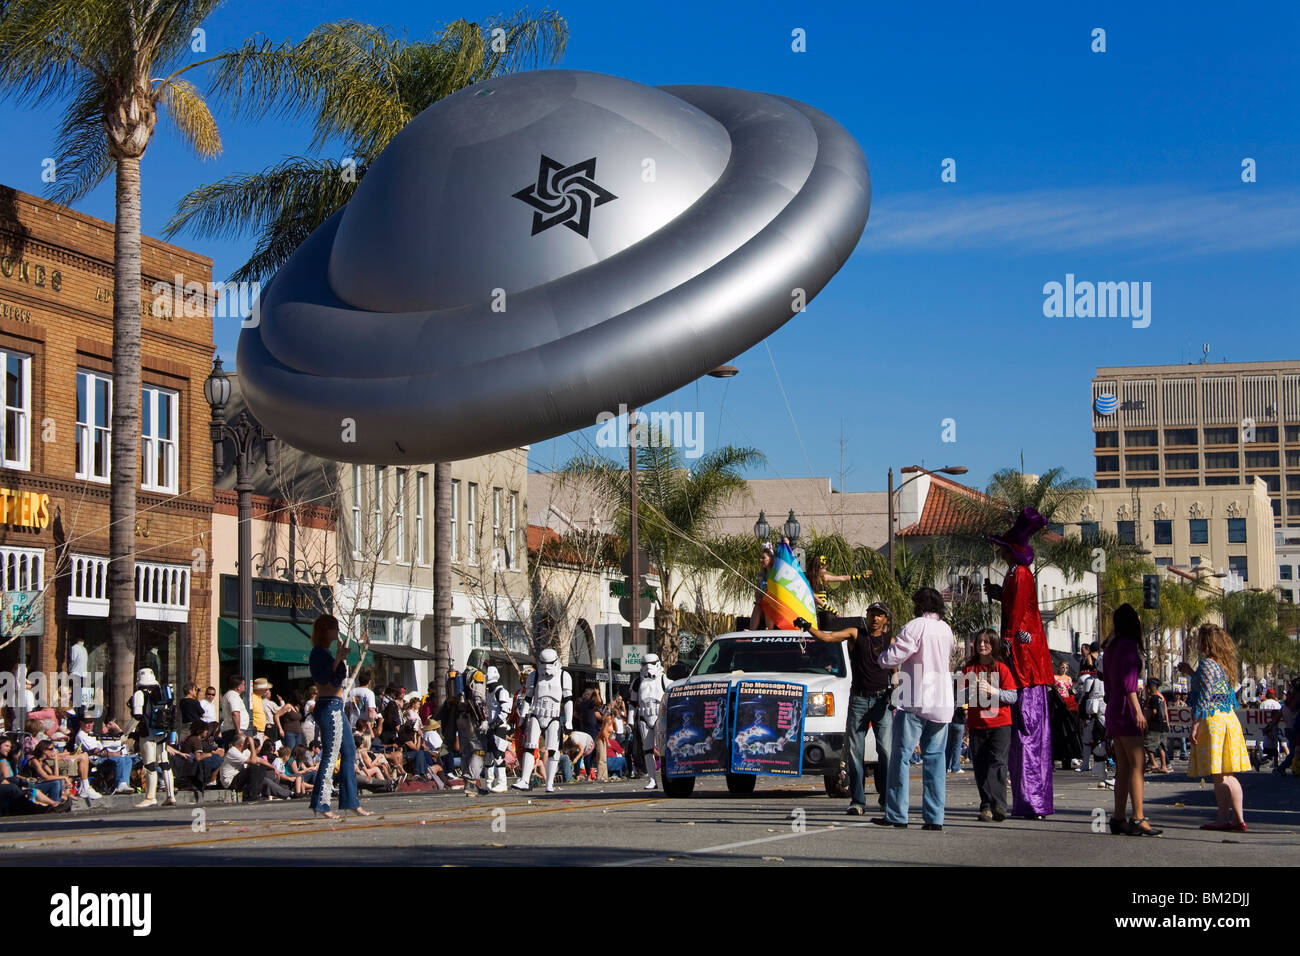 Spaceship, Doo Dah Parade, Pasadena, Los Angeles, California, USA Stock Photo